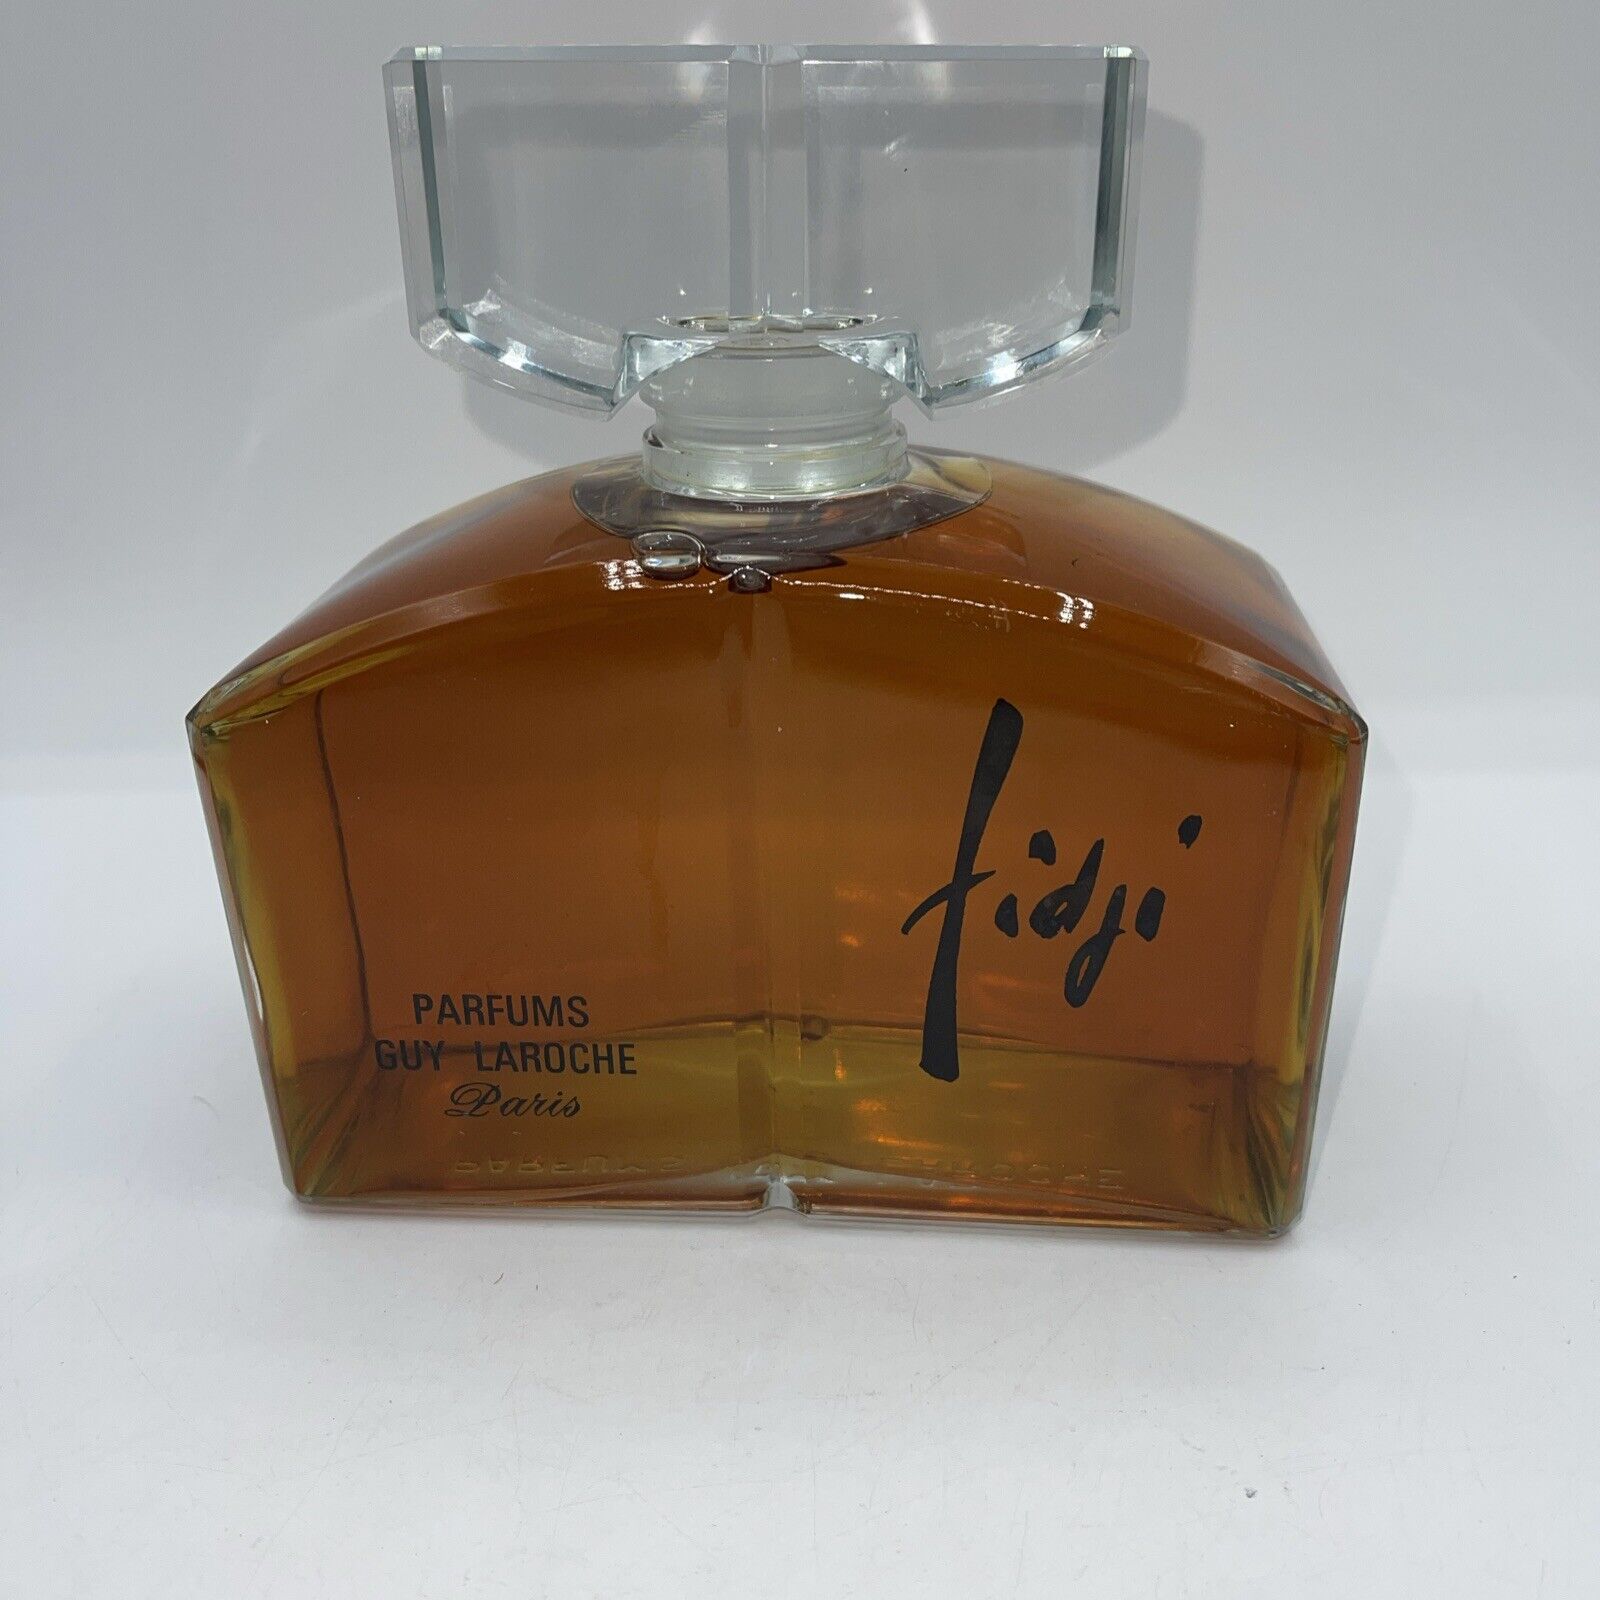 Guy Laroche FIDJi Pure Perfume 32 Ounce Store Display From Dillards Vintage